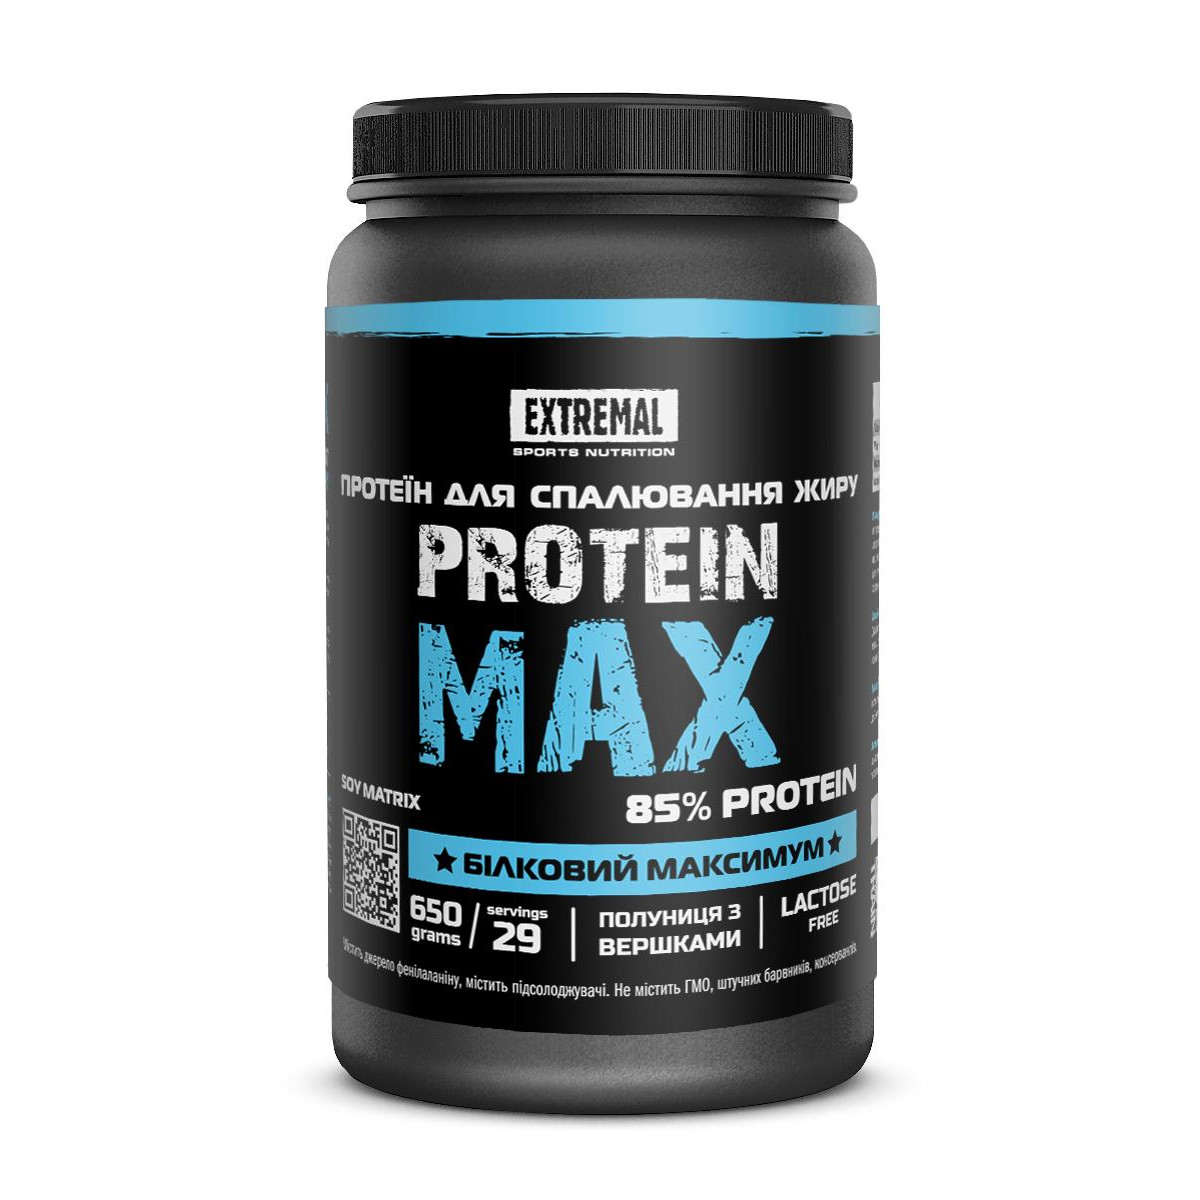 Extremal Protein Max /Білковий максимум/ 650 g /29 servings/ Клубничный смузи - зображення 1